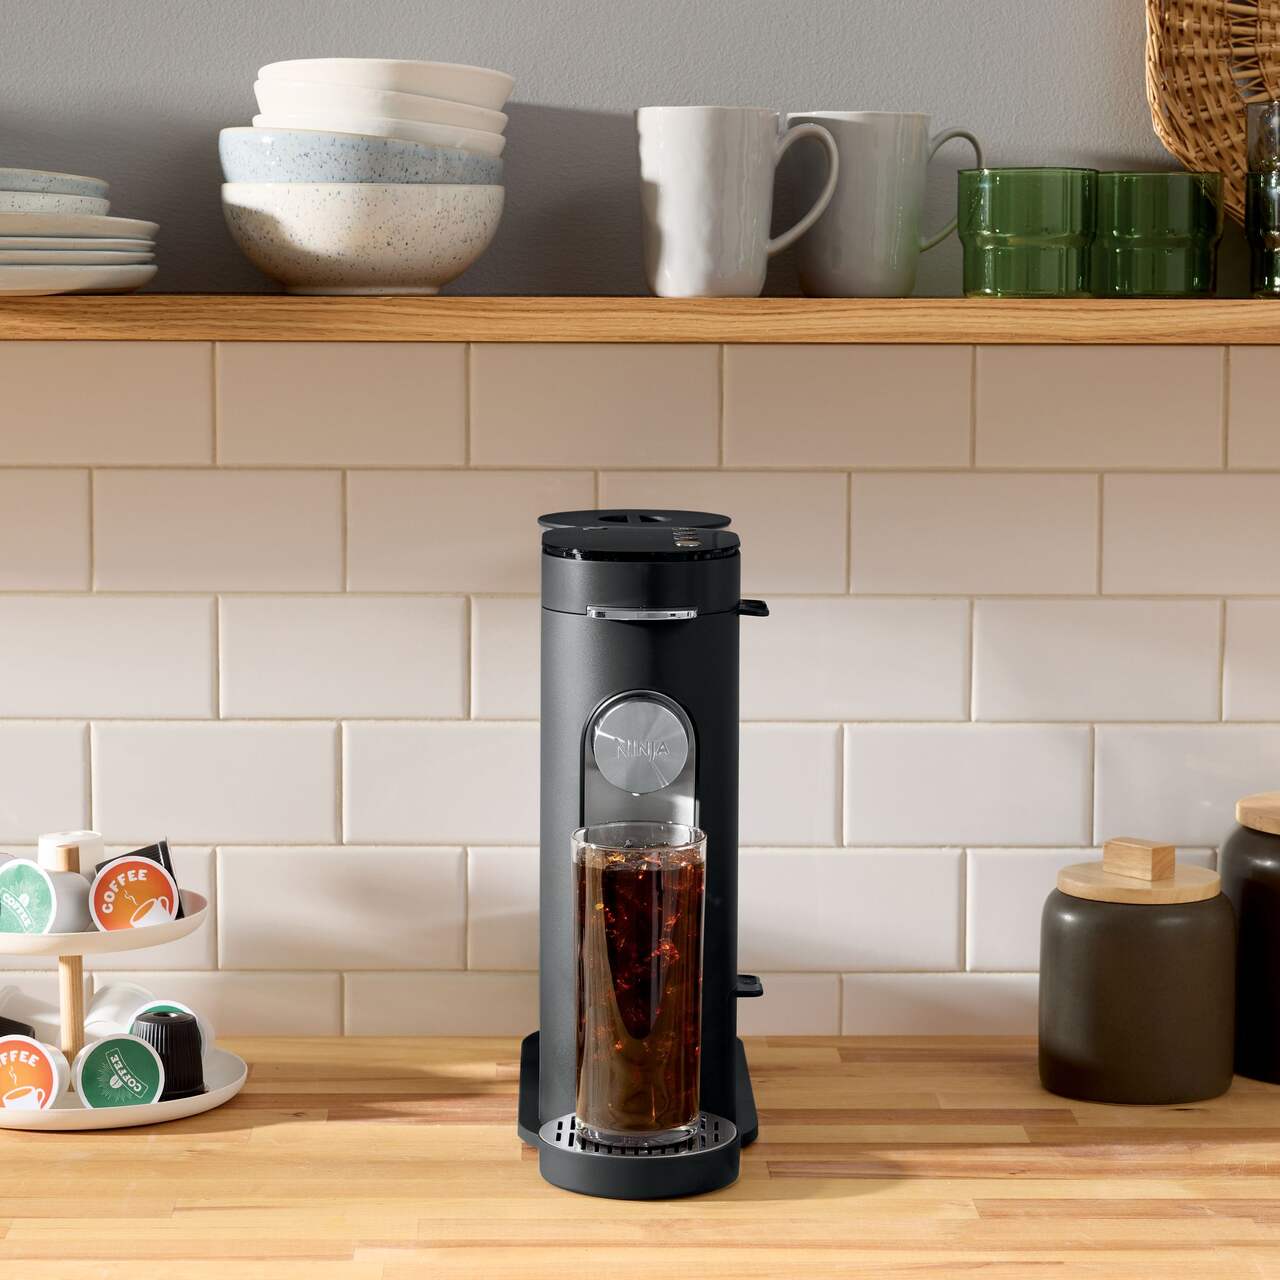 Ninja® Single Serve Dual Brew Coffee Maker, Brews Grounds & Pods, Black,  6-Cup